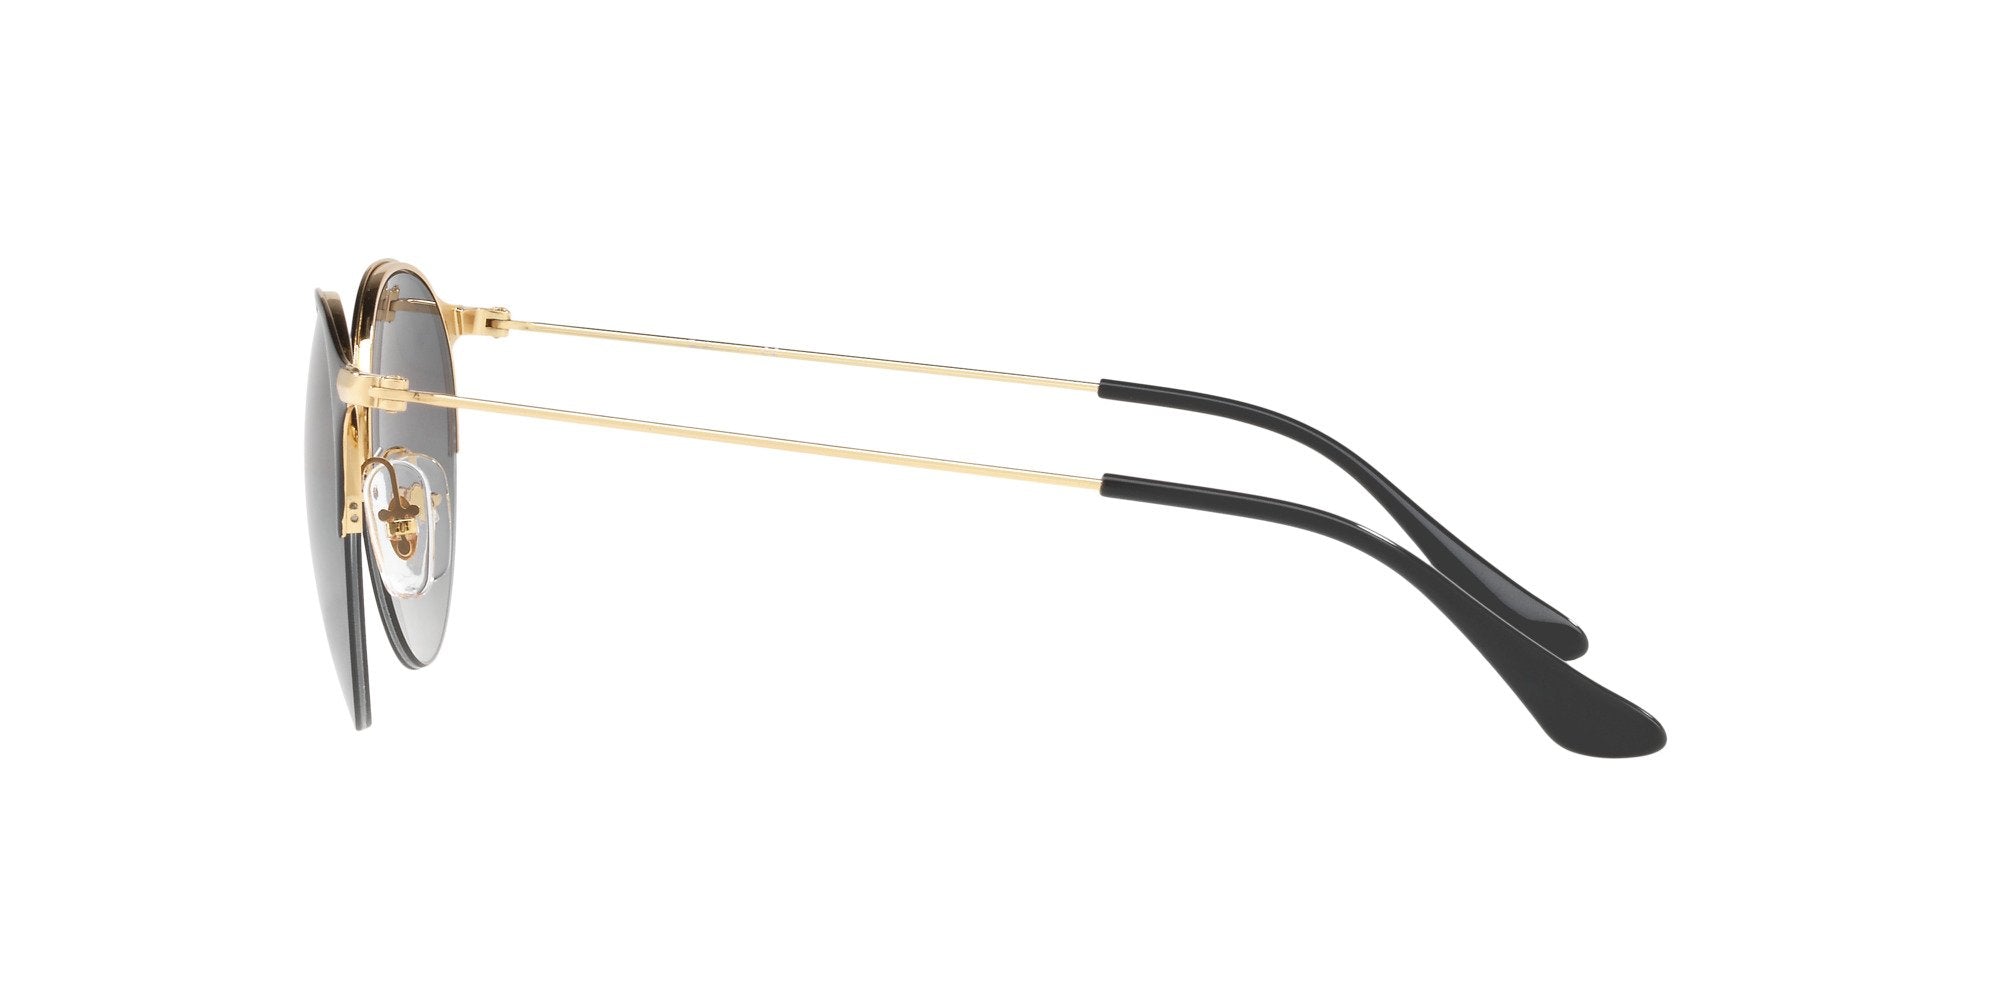 Ray-Ban Unisex RB3578 Black Sunglasses